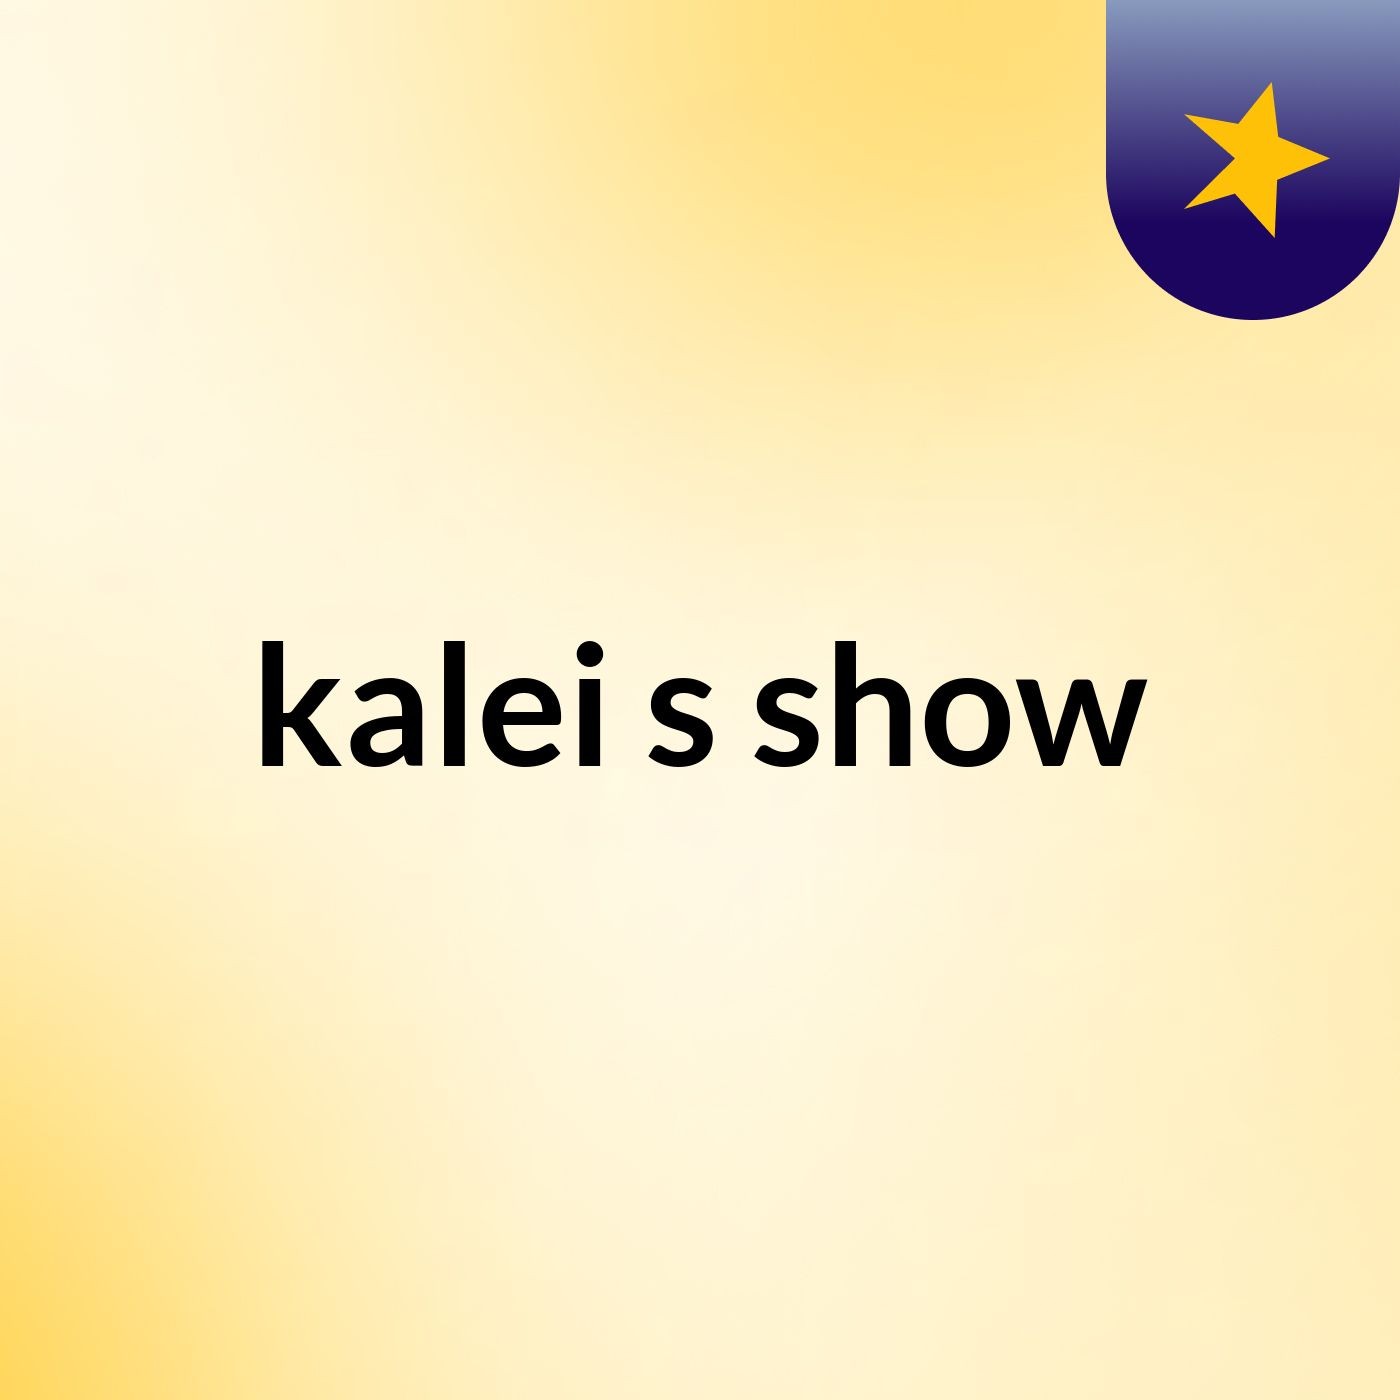 kalei's show